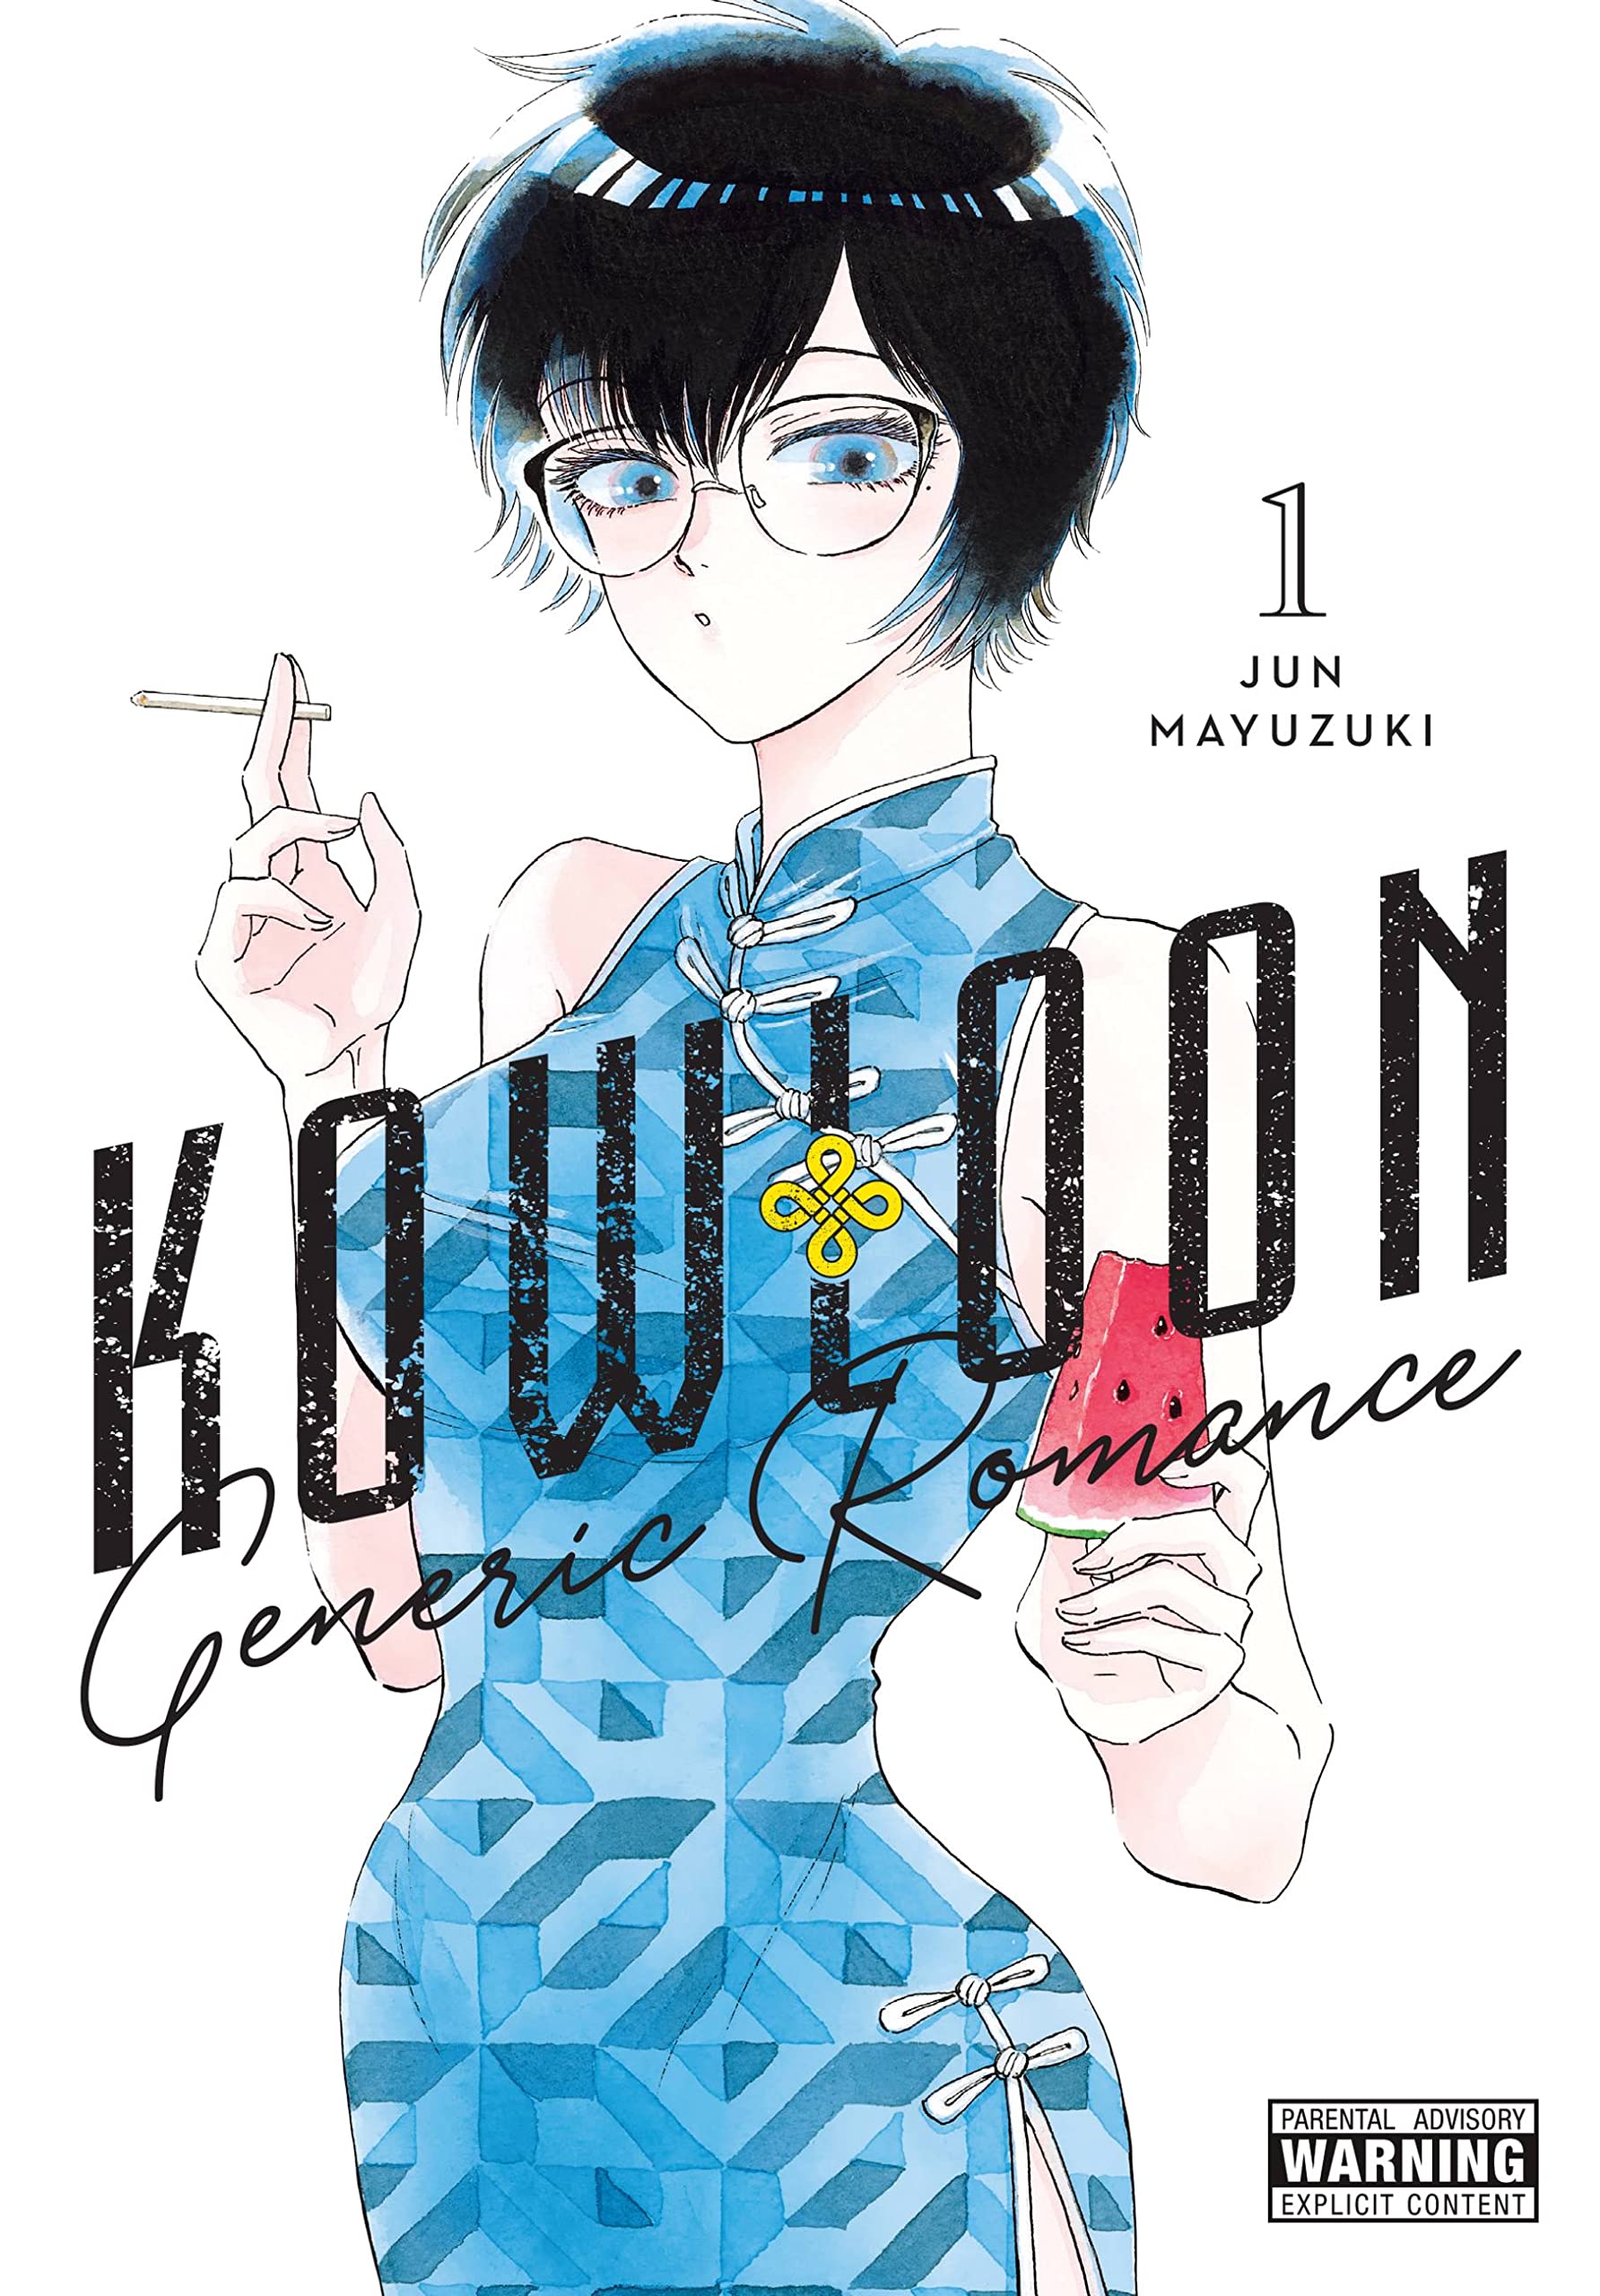 Kowloon generic romance anime